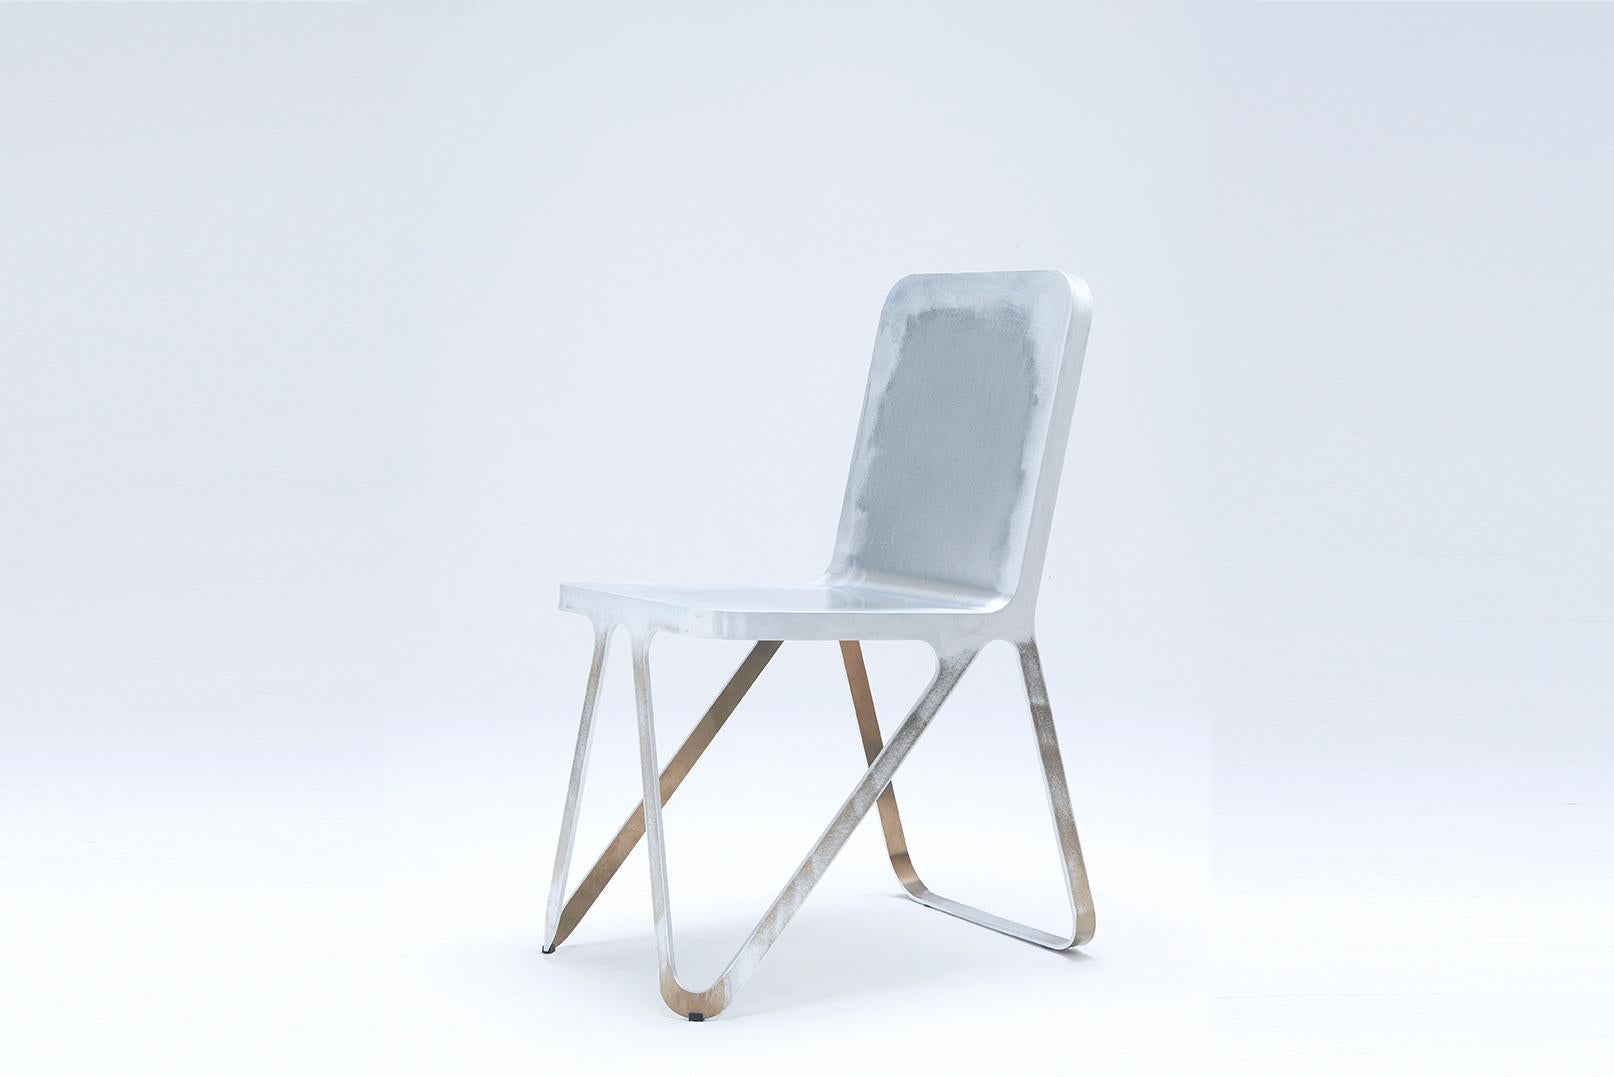 Raw Aluminium loop chair by Sebastian Scherer
Dimensions: D57x w40 x H80 cm
Material: Aluminium.
Weight: 51 kg.
Also available: Colours: Snow white / light sand / sun yellow / clay orange / rust red / space blue / graphite grey / dark bronze /